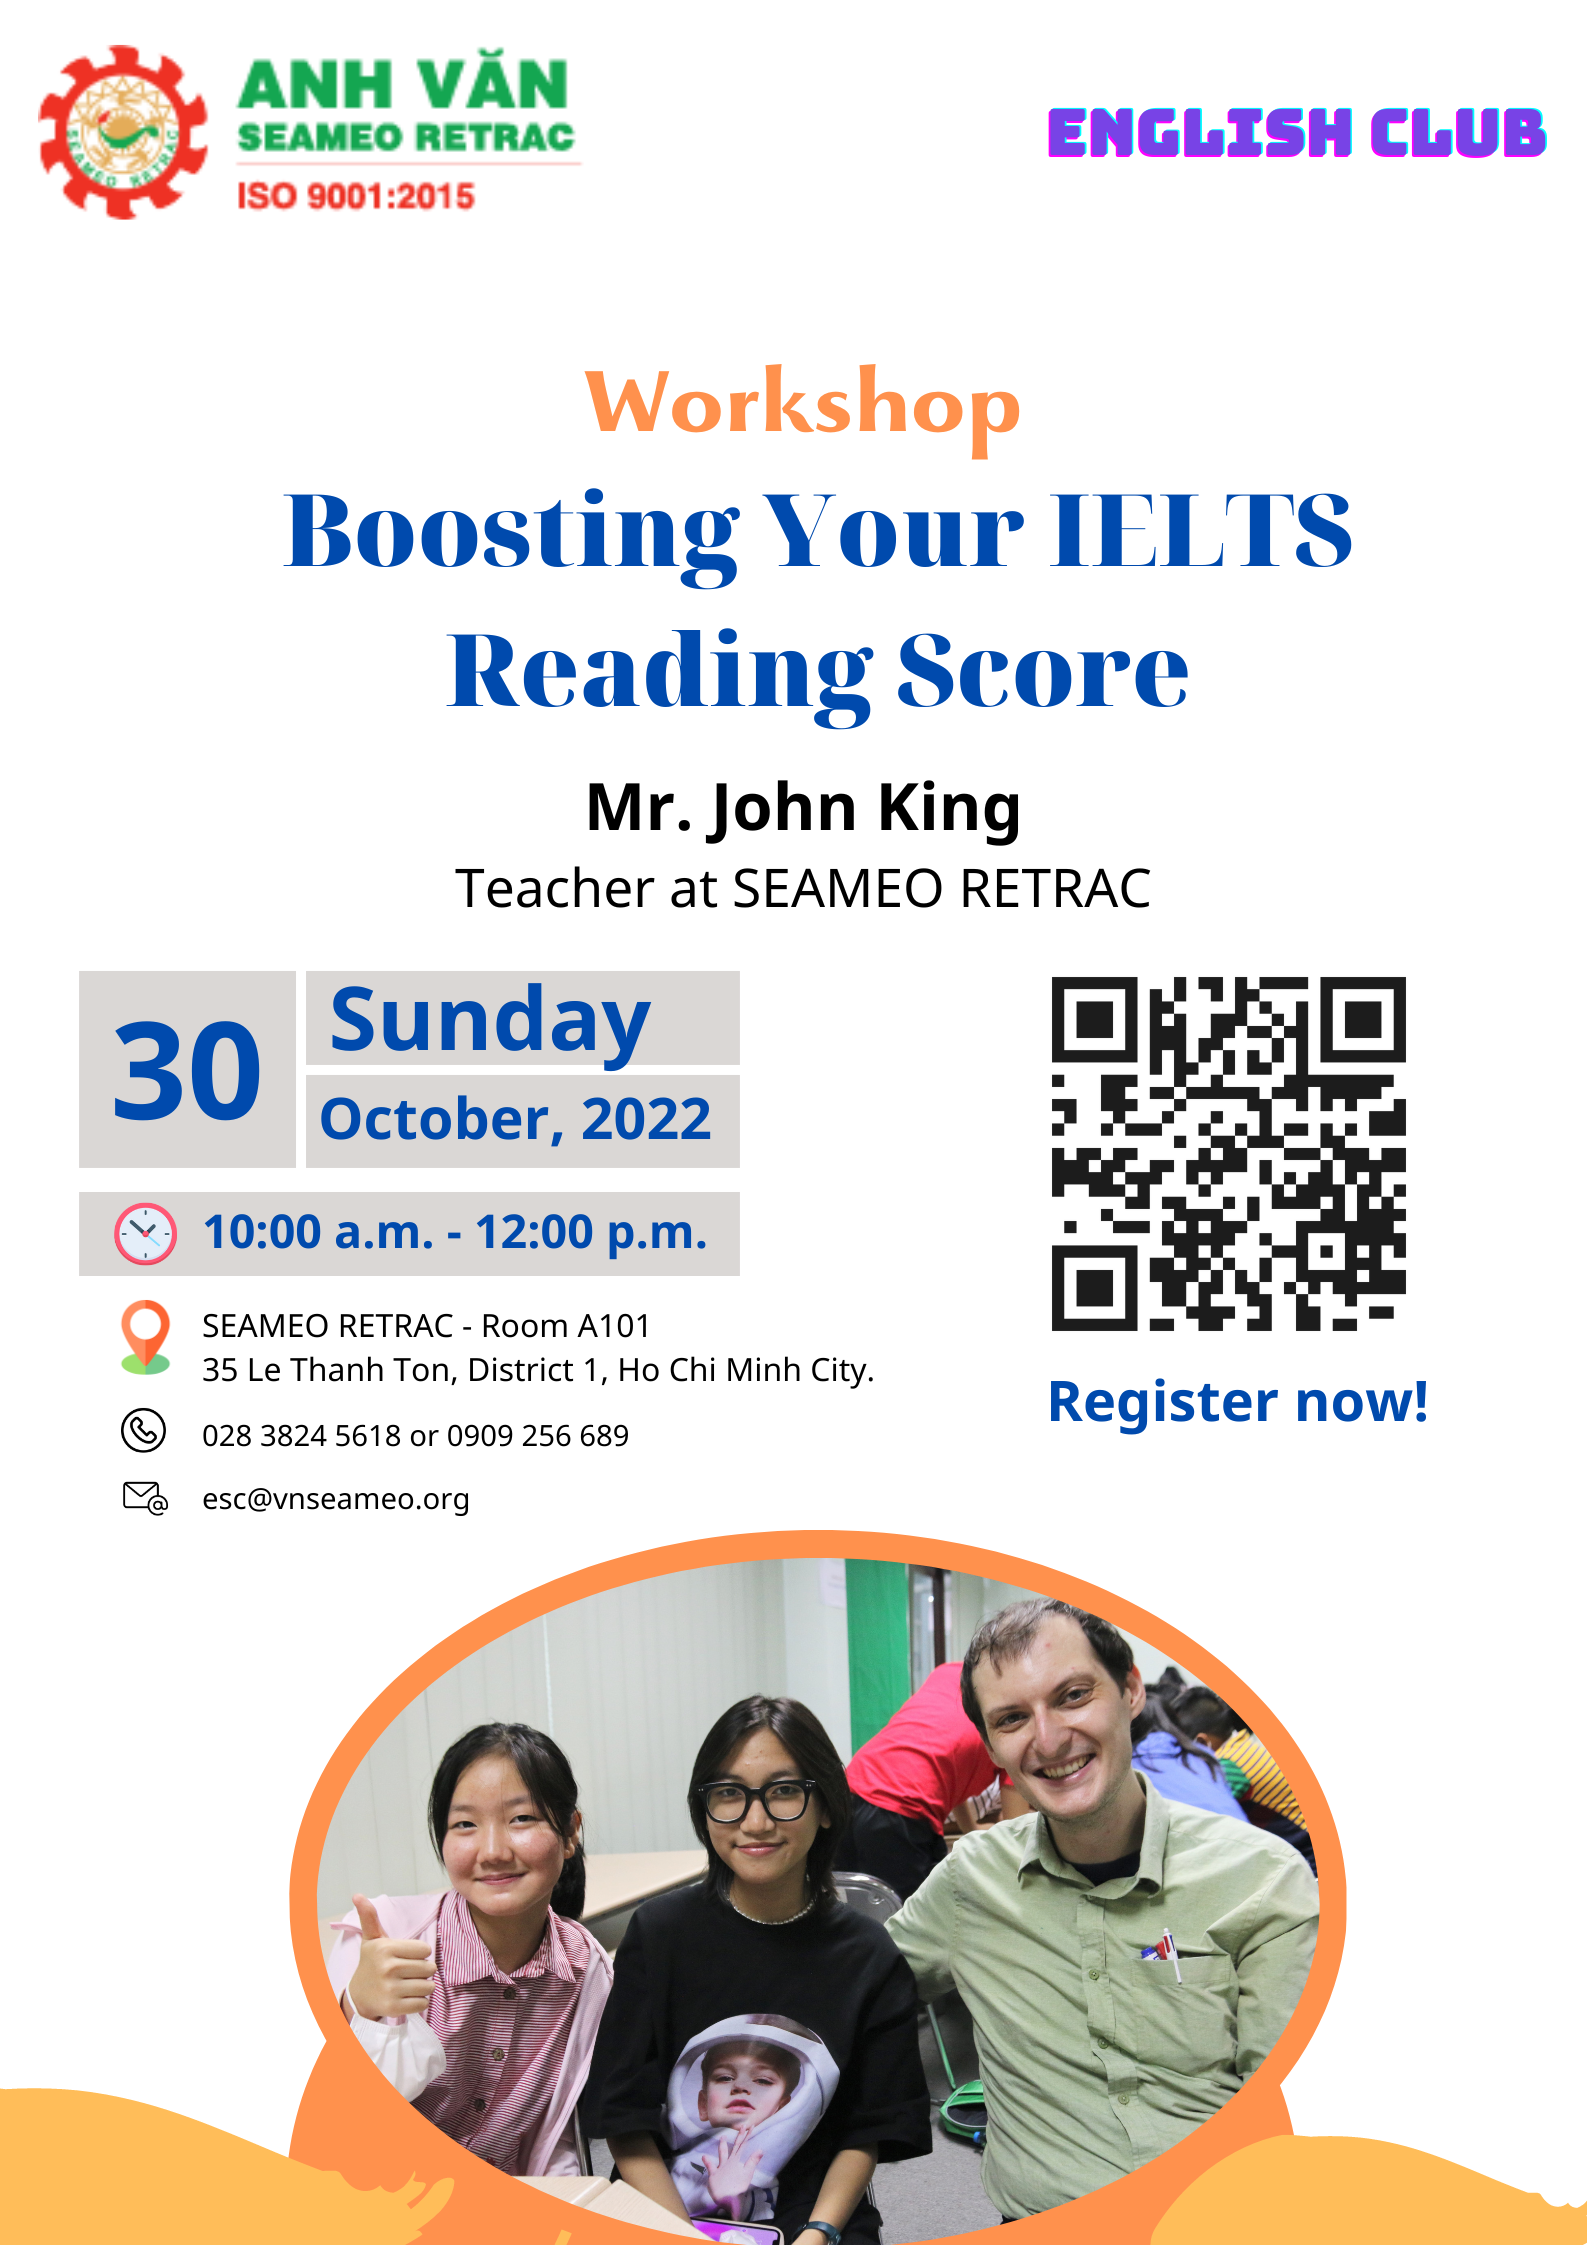 Workshop titled “Boosting Your IELTS Reading Score”